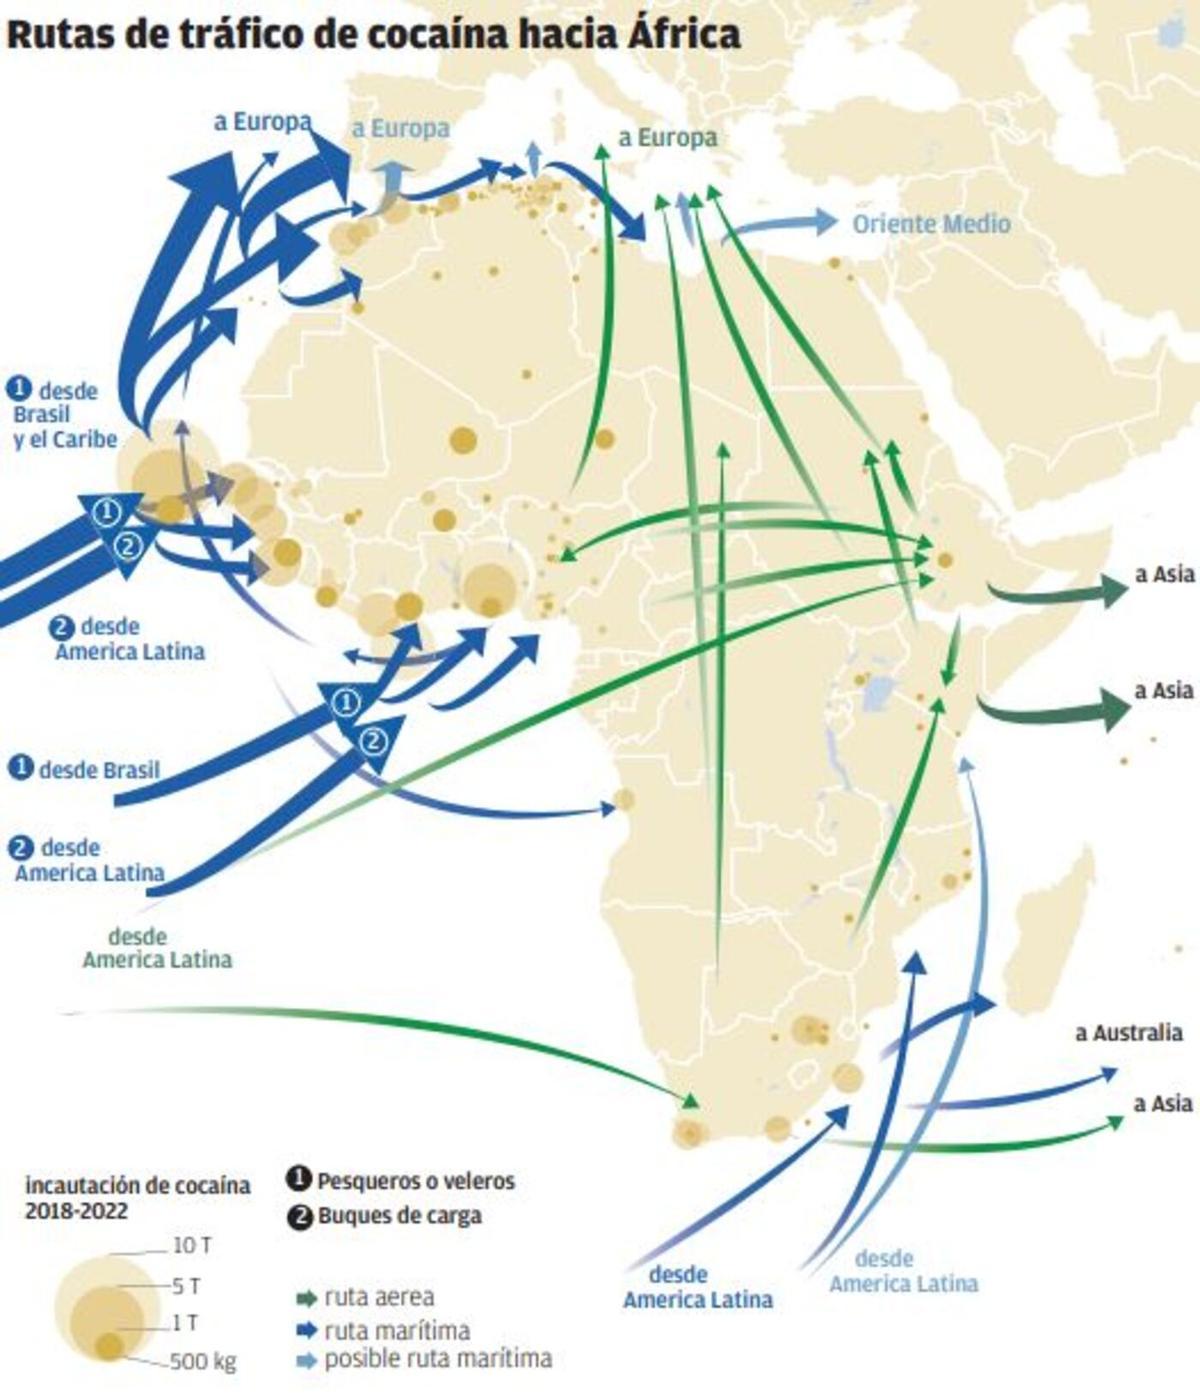 Rutas de tráfico de cocaína hacia África.